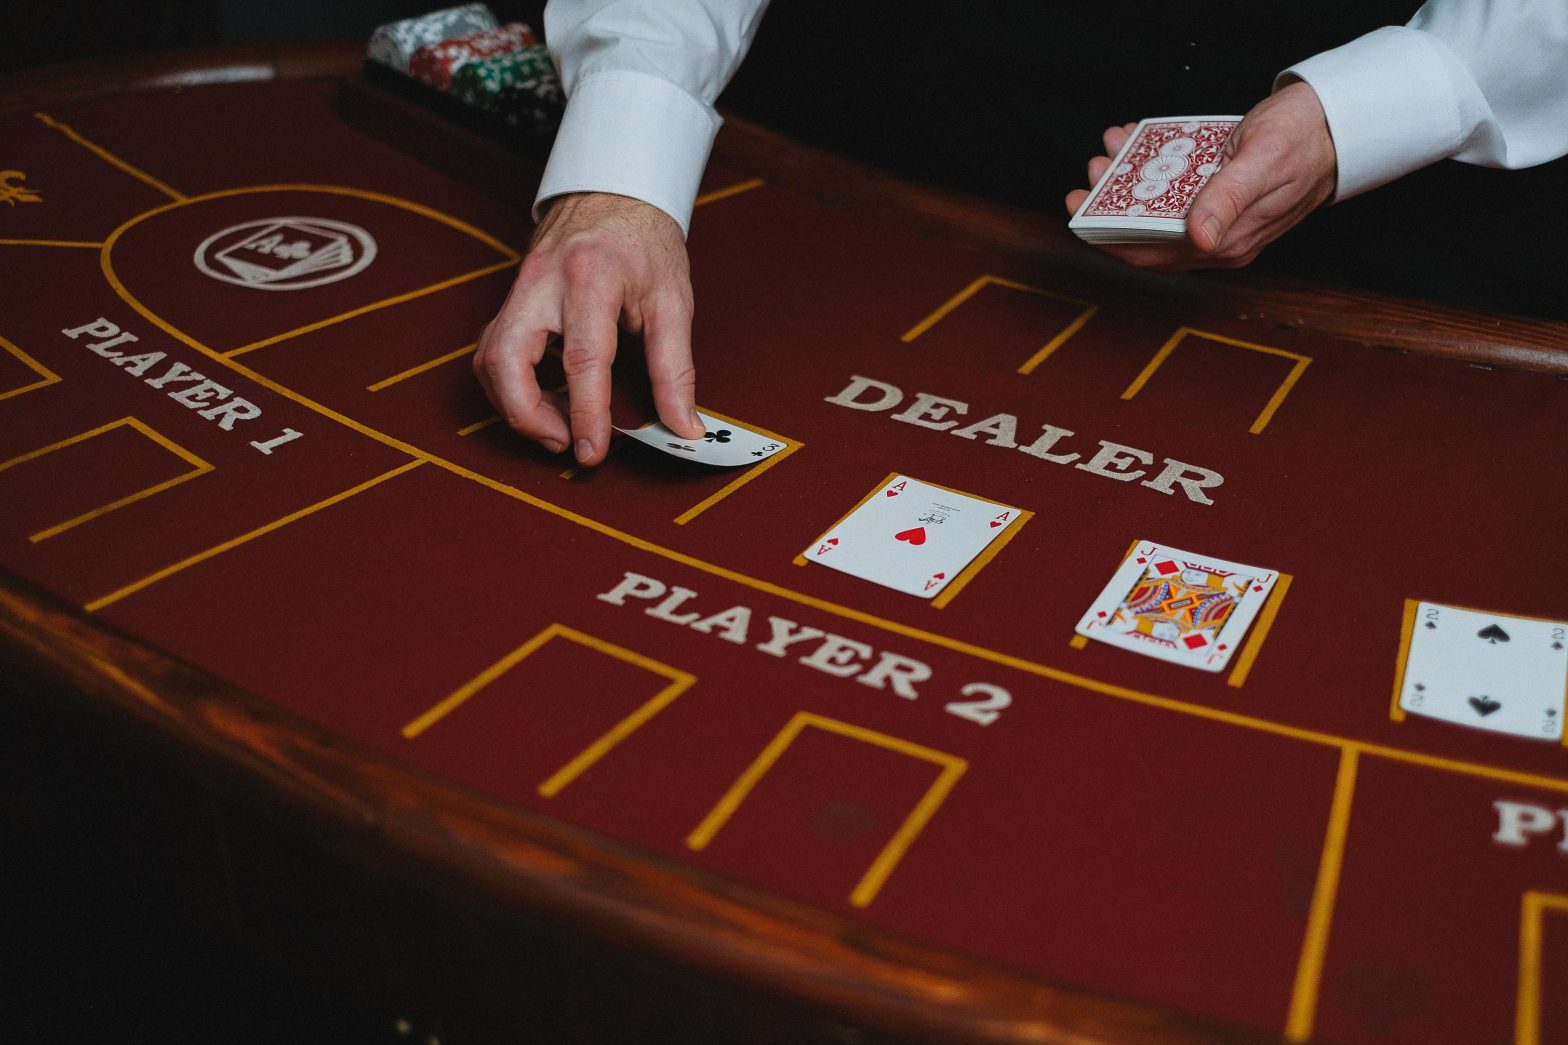 Pailin Online Casino: Where Technology Meets Entertainment